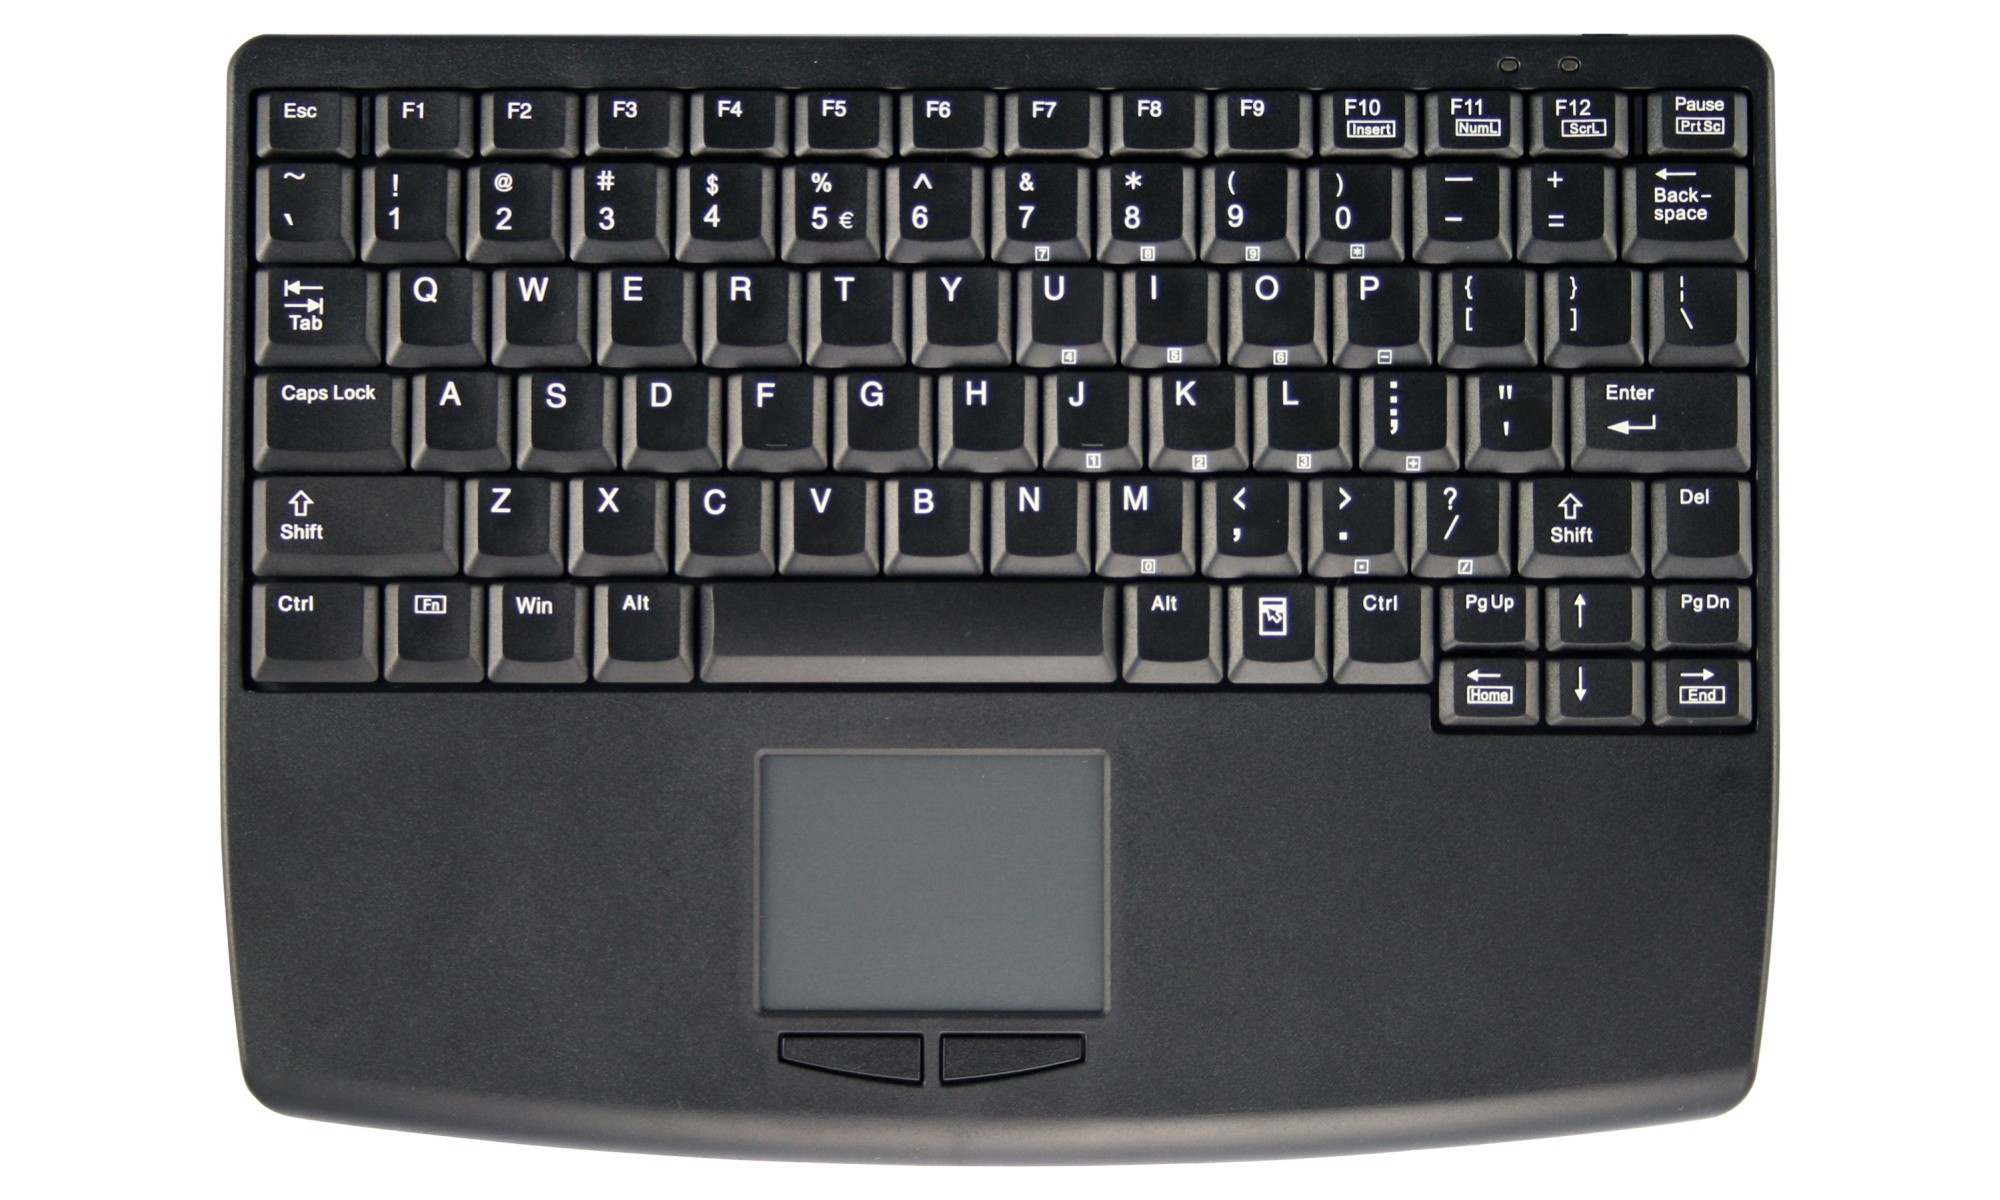 Flat Centric Touchpad Keyboard, USB, Black, German layout